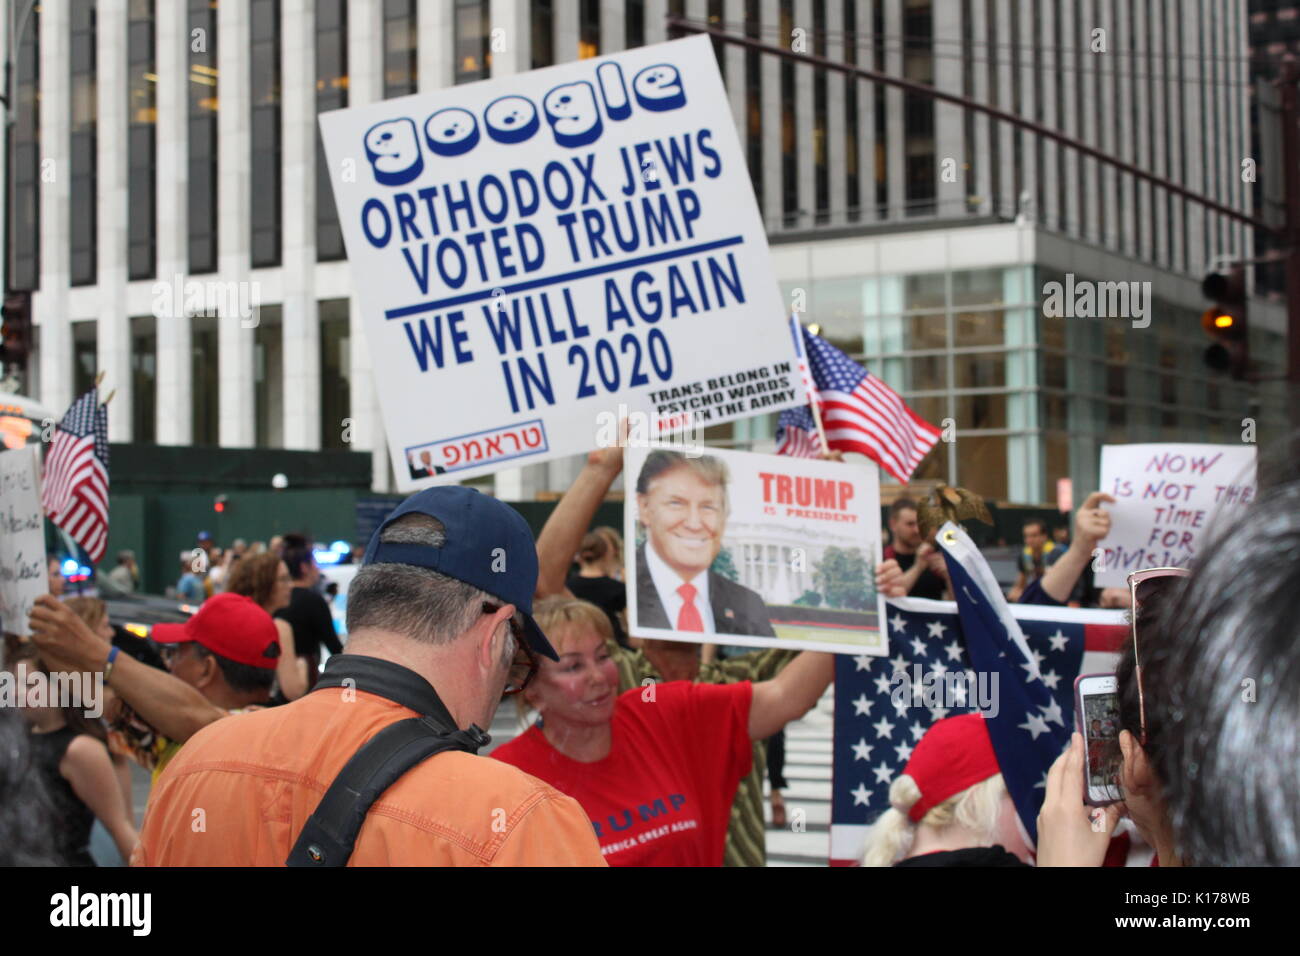 Pro-Trump demonstrators at anti-Trump protest Stock Photo